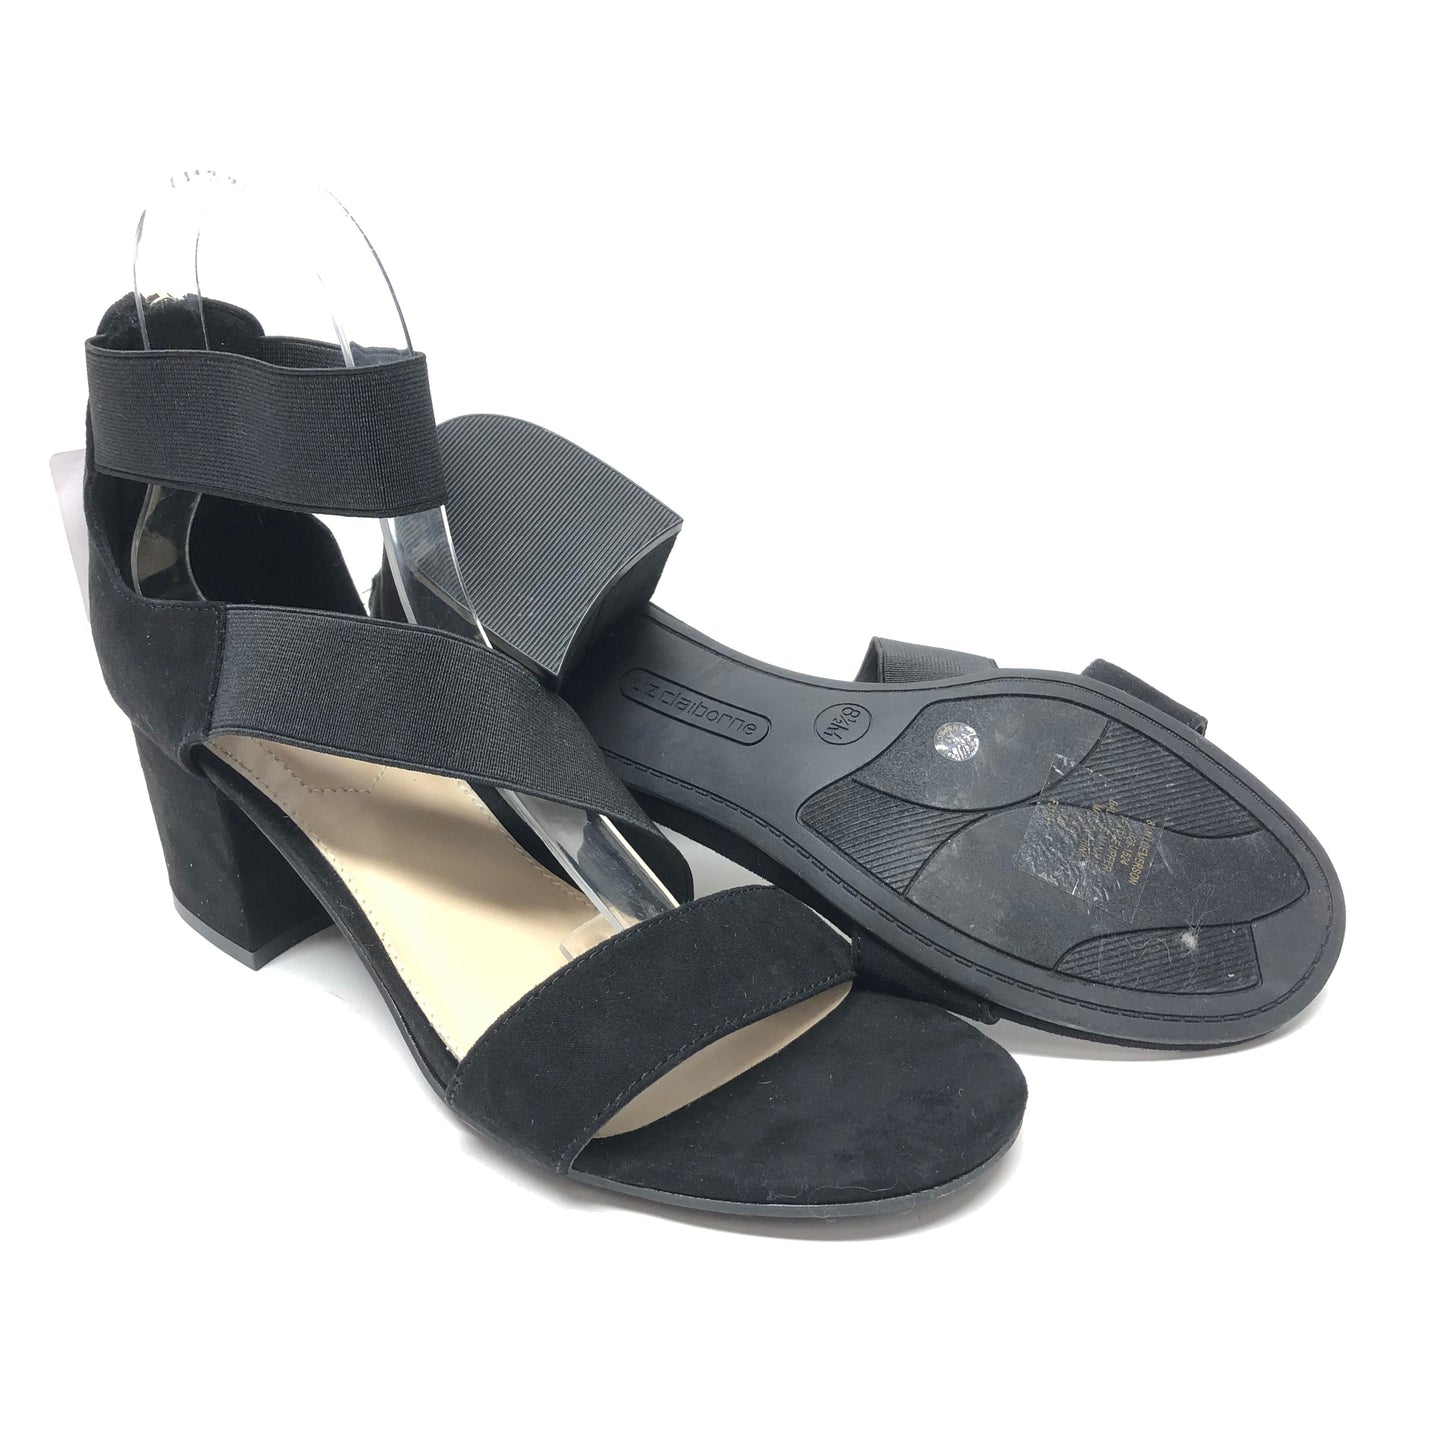 Black Sandals Heels Block Liz Claiborne, Size 8.5